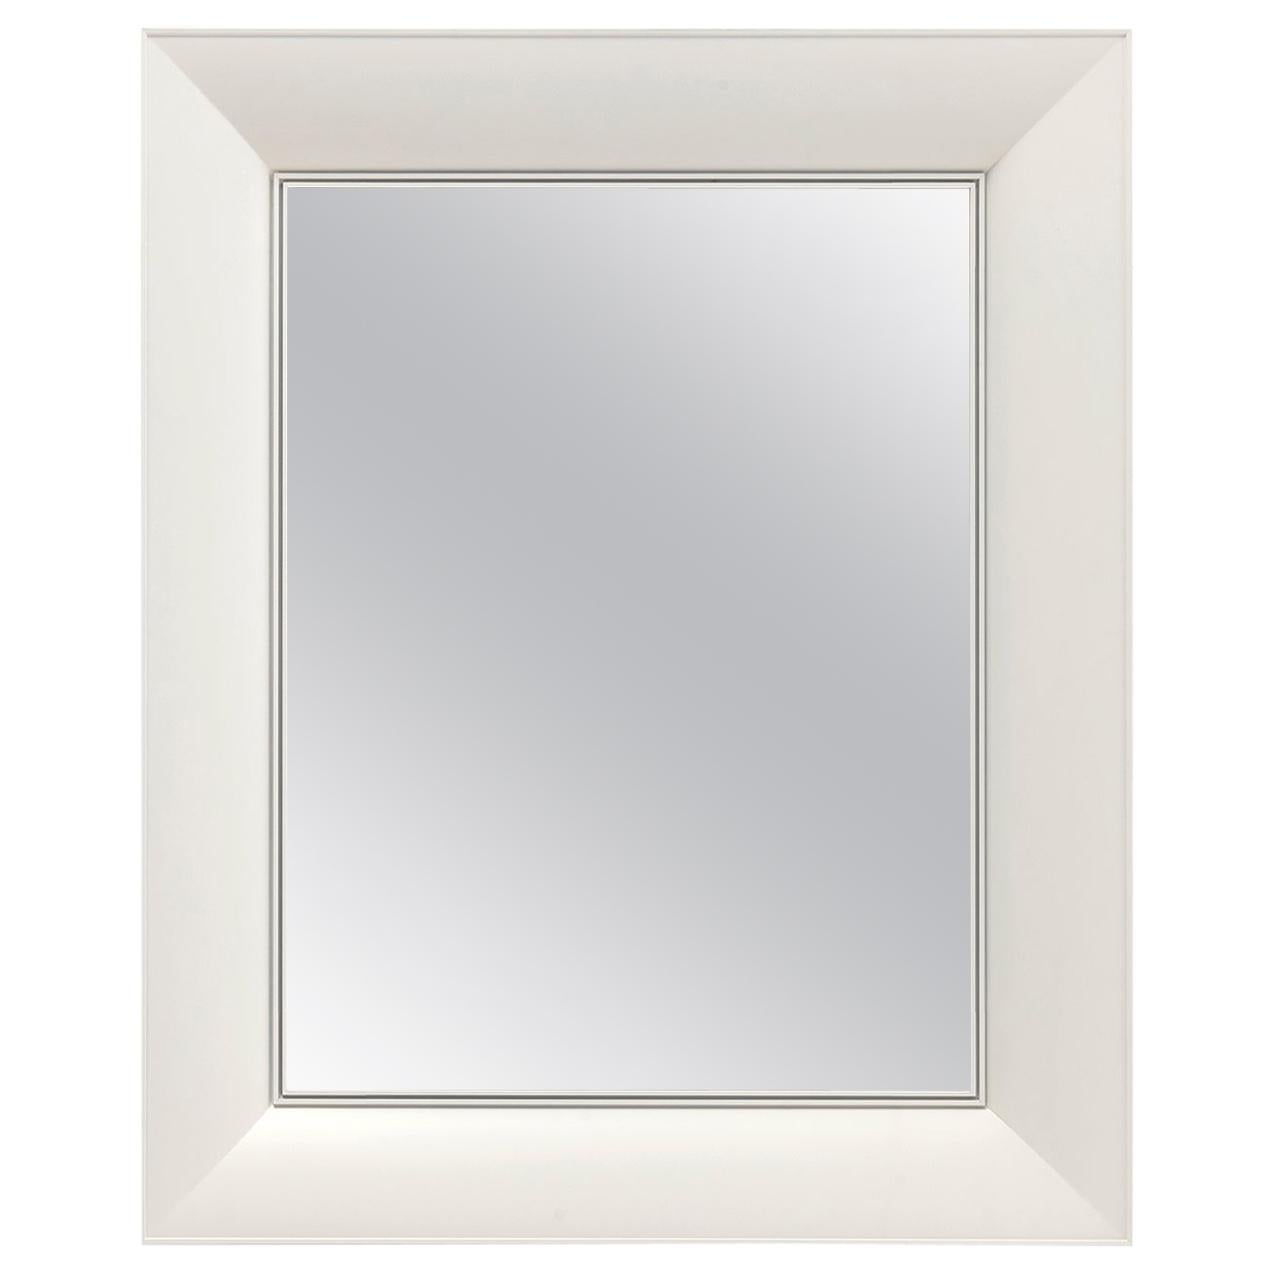 Petit miroir rectangulaire « Francois Ghost » Kartell en blanc mat de Philippe Starck